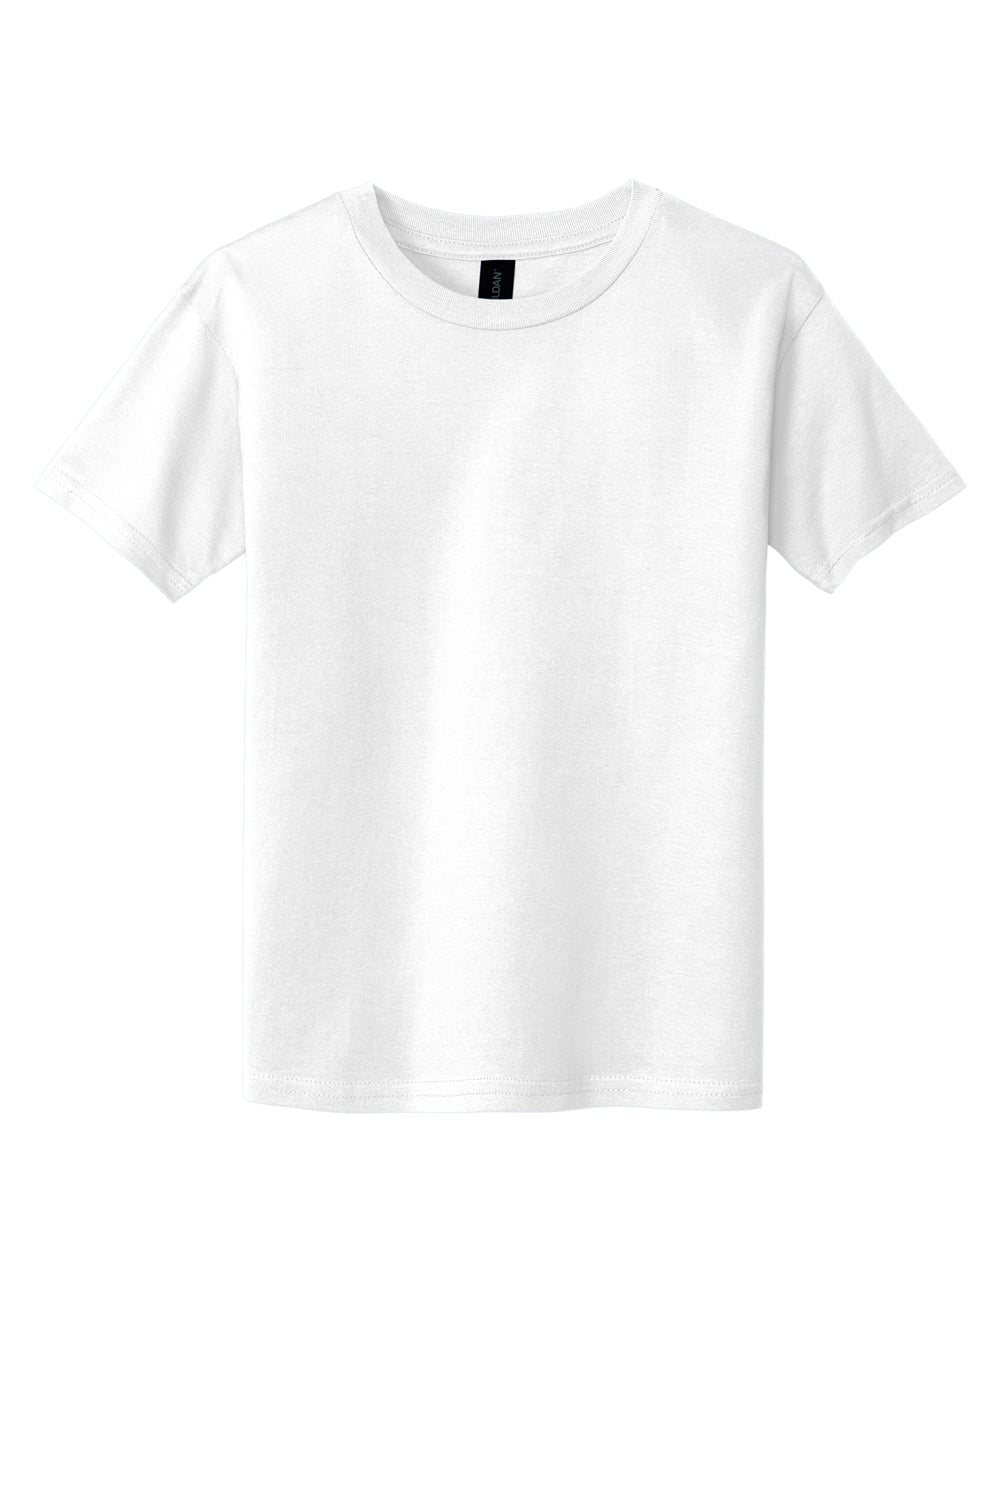 Gildan Youth Softstyle Short Sleeve Crewneck T-Shirt White Flat Front